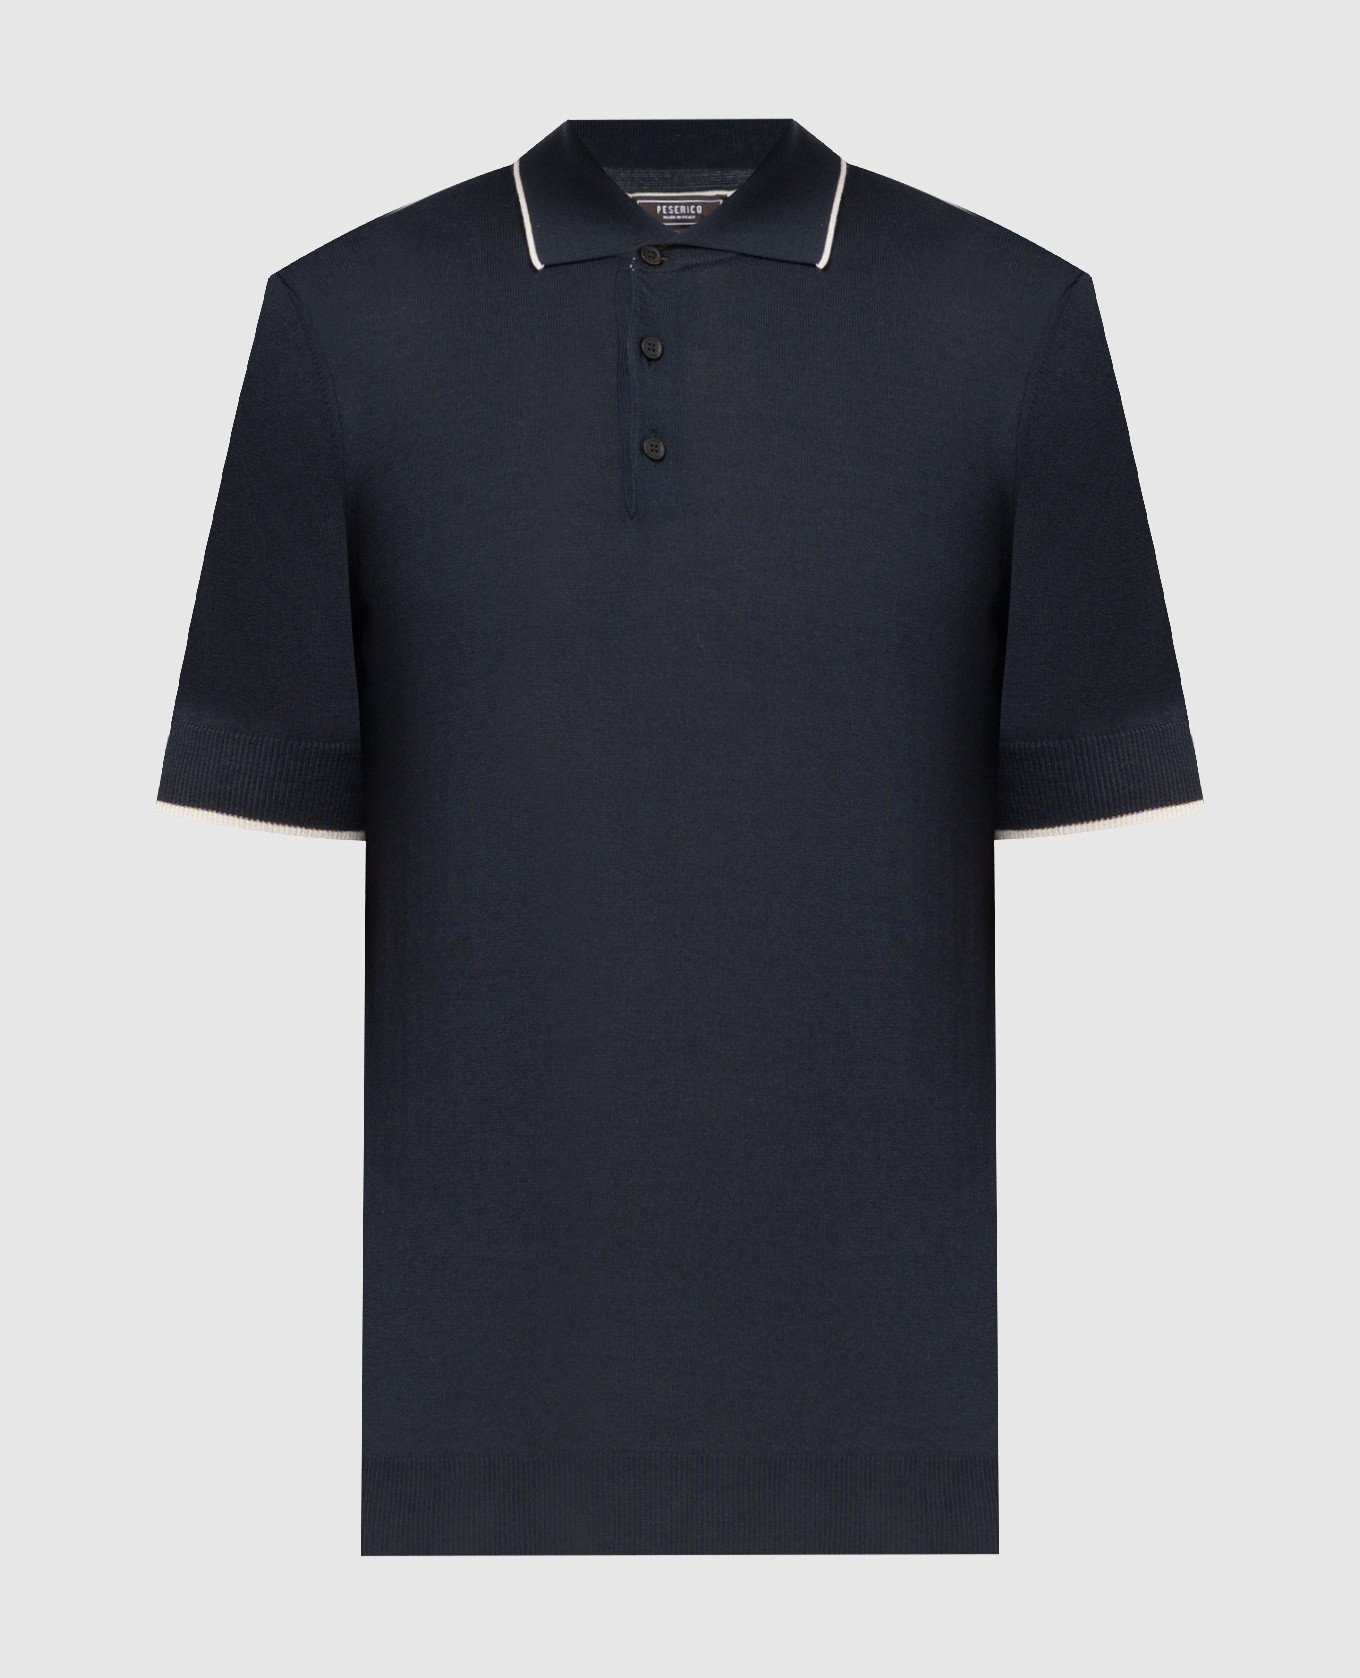 Blue polo shirt with contrasting trim